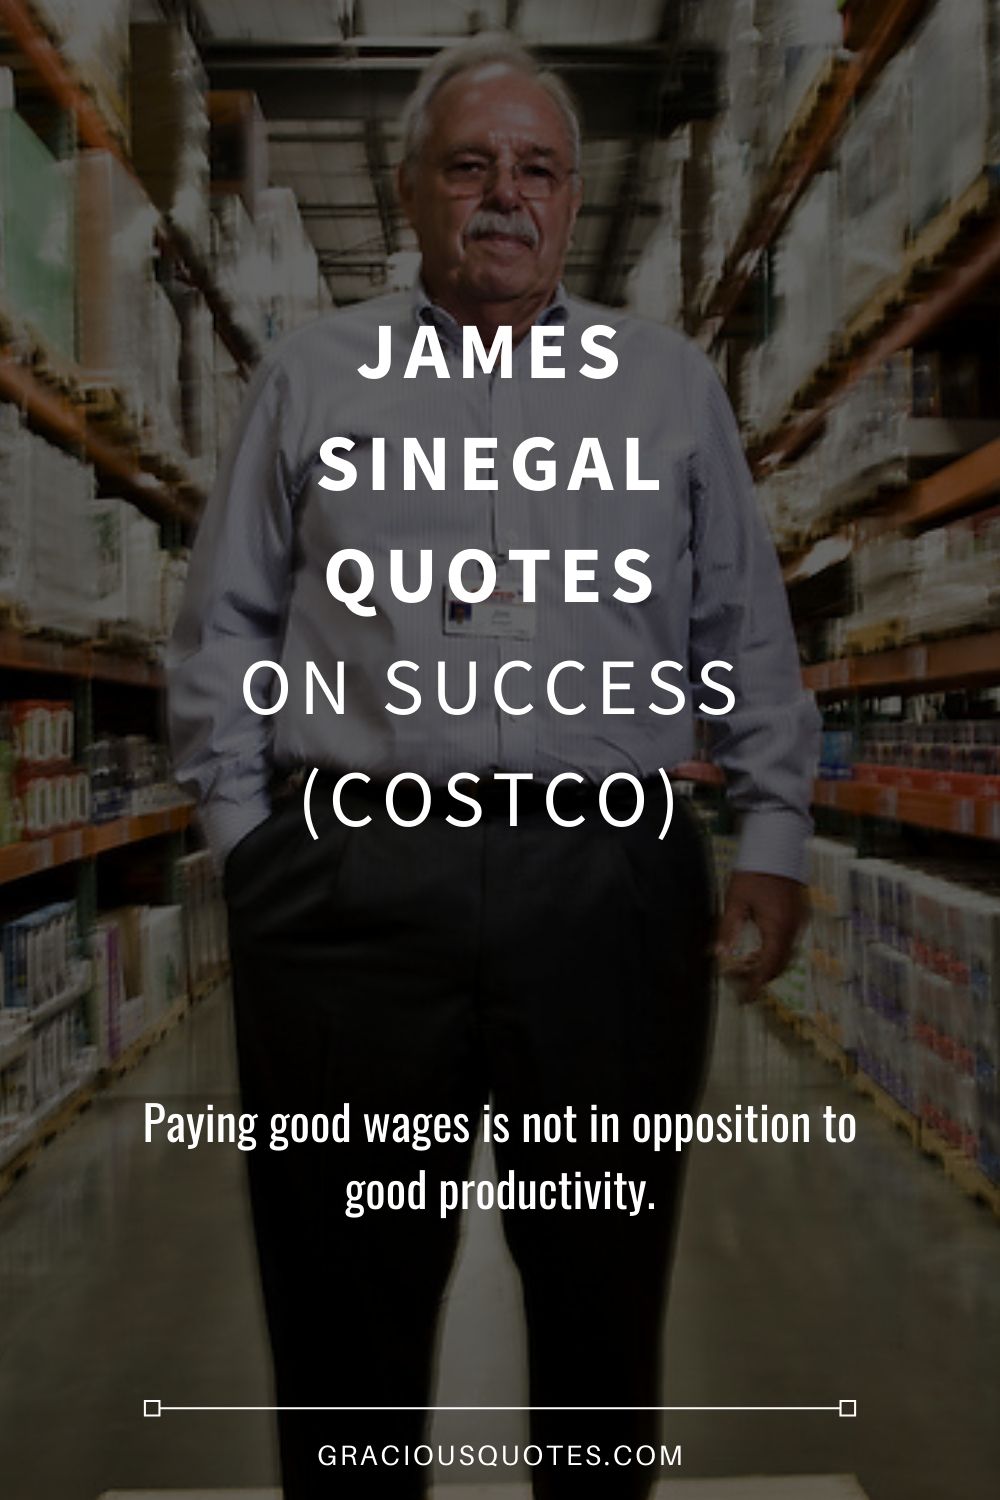 James Sinegal Quotes on Success (COSTCO) - Gracious Quotes